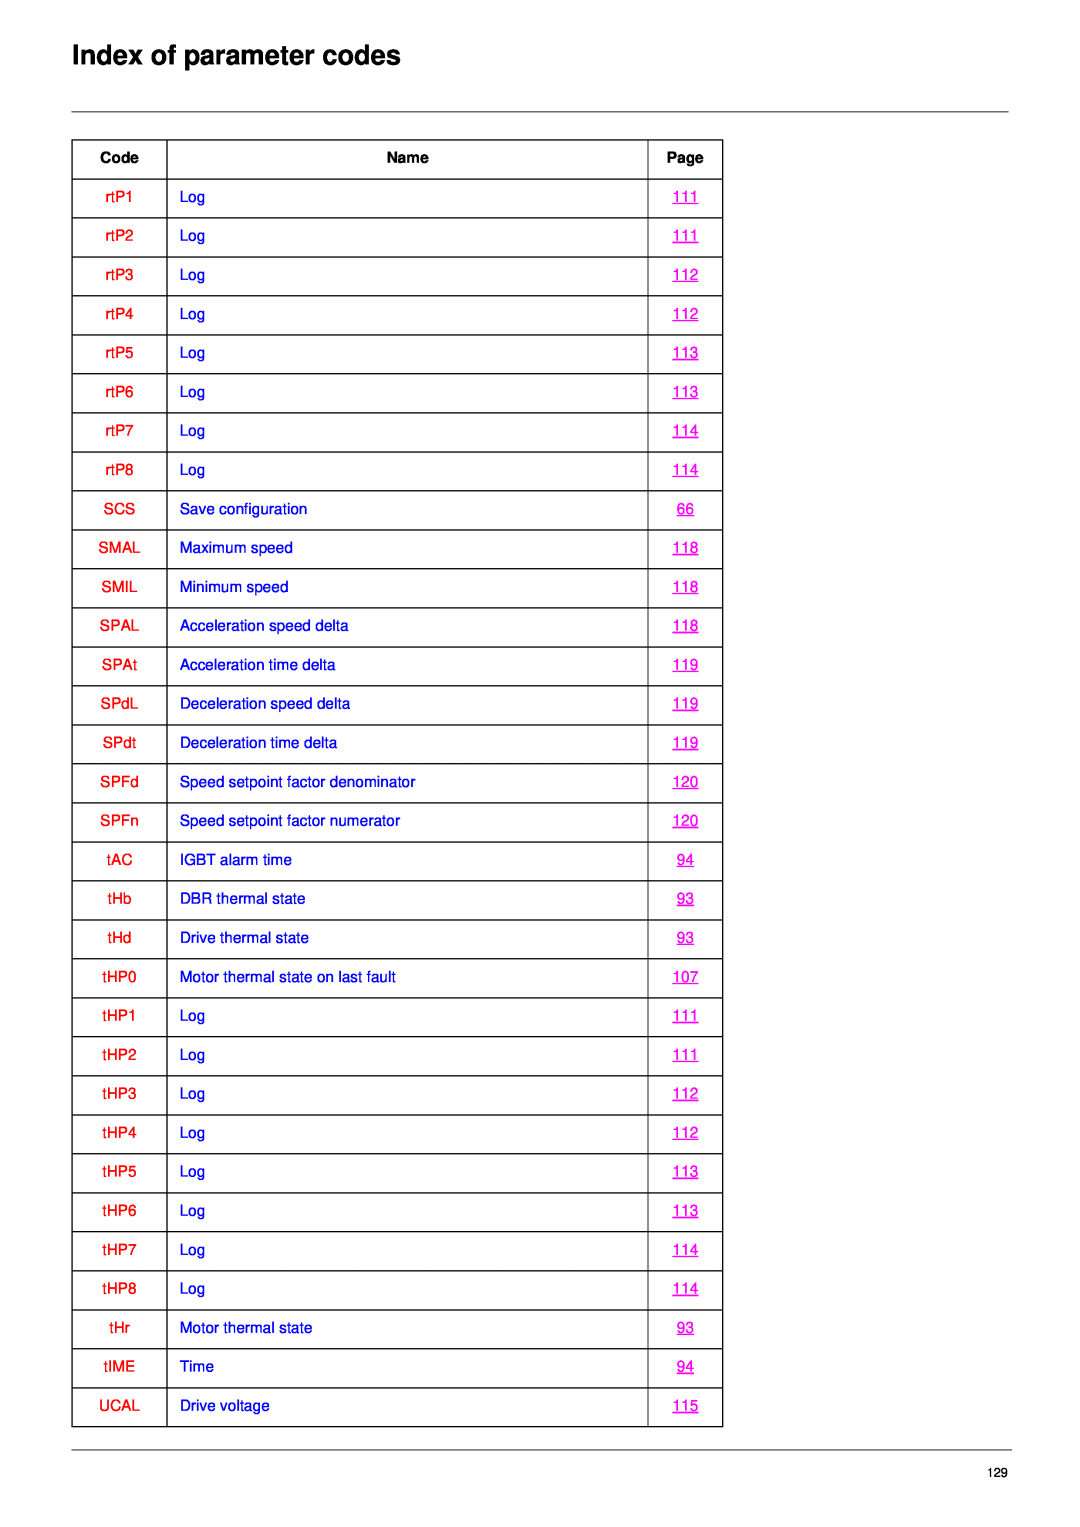 Schneider Electric 61 user manual Index of parameter codes, rtP1 